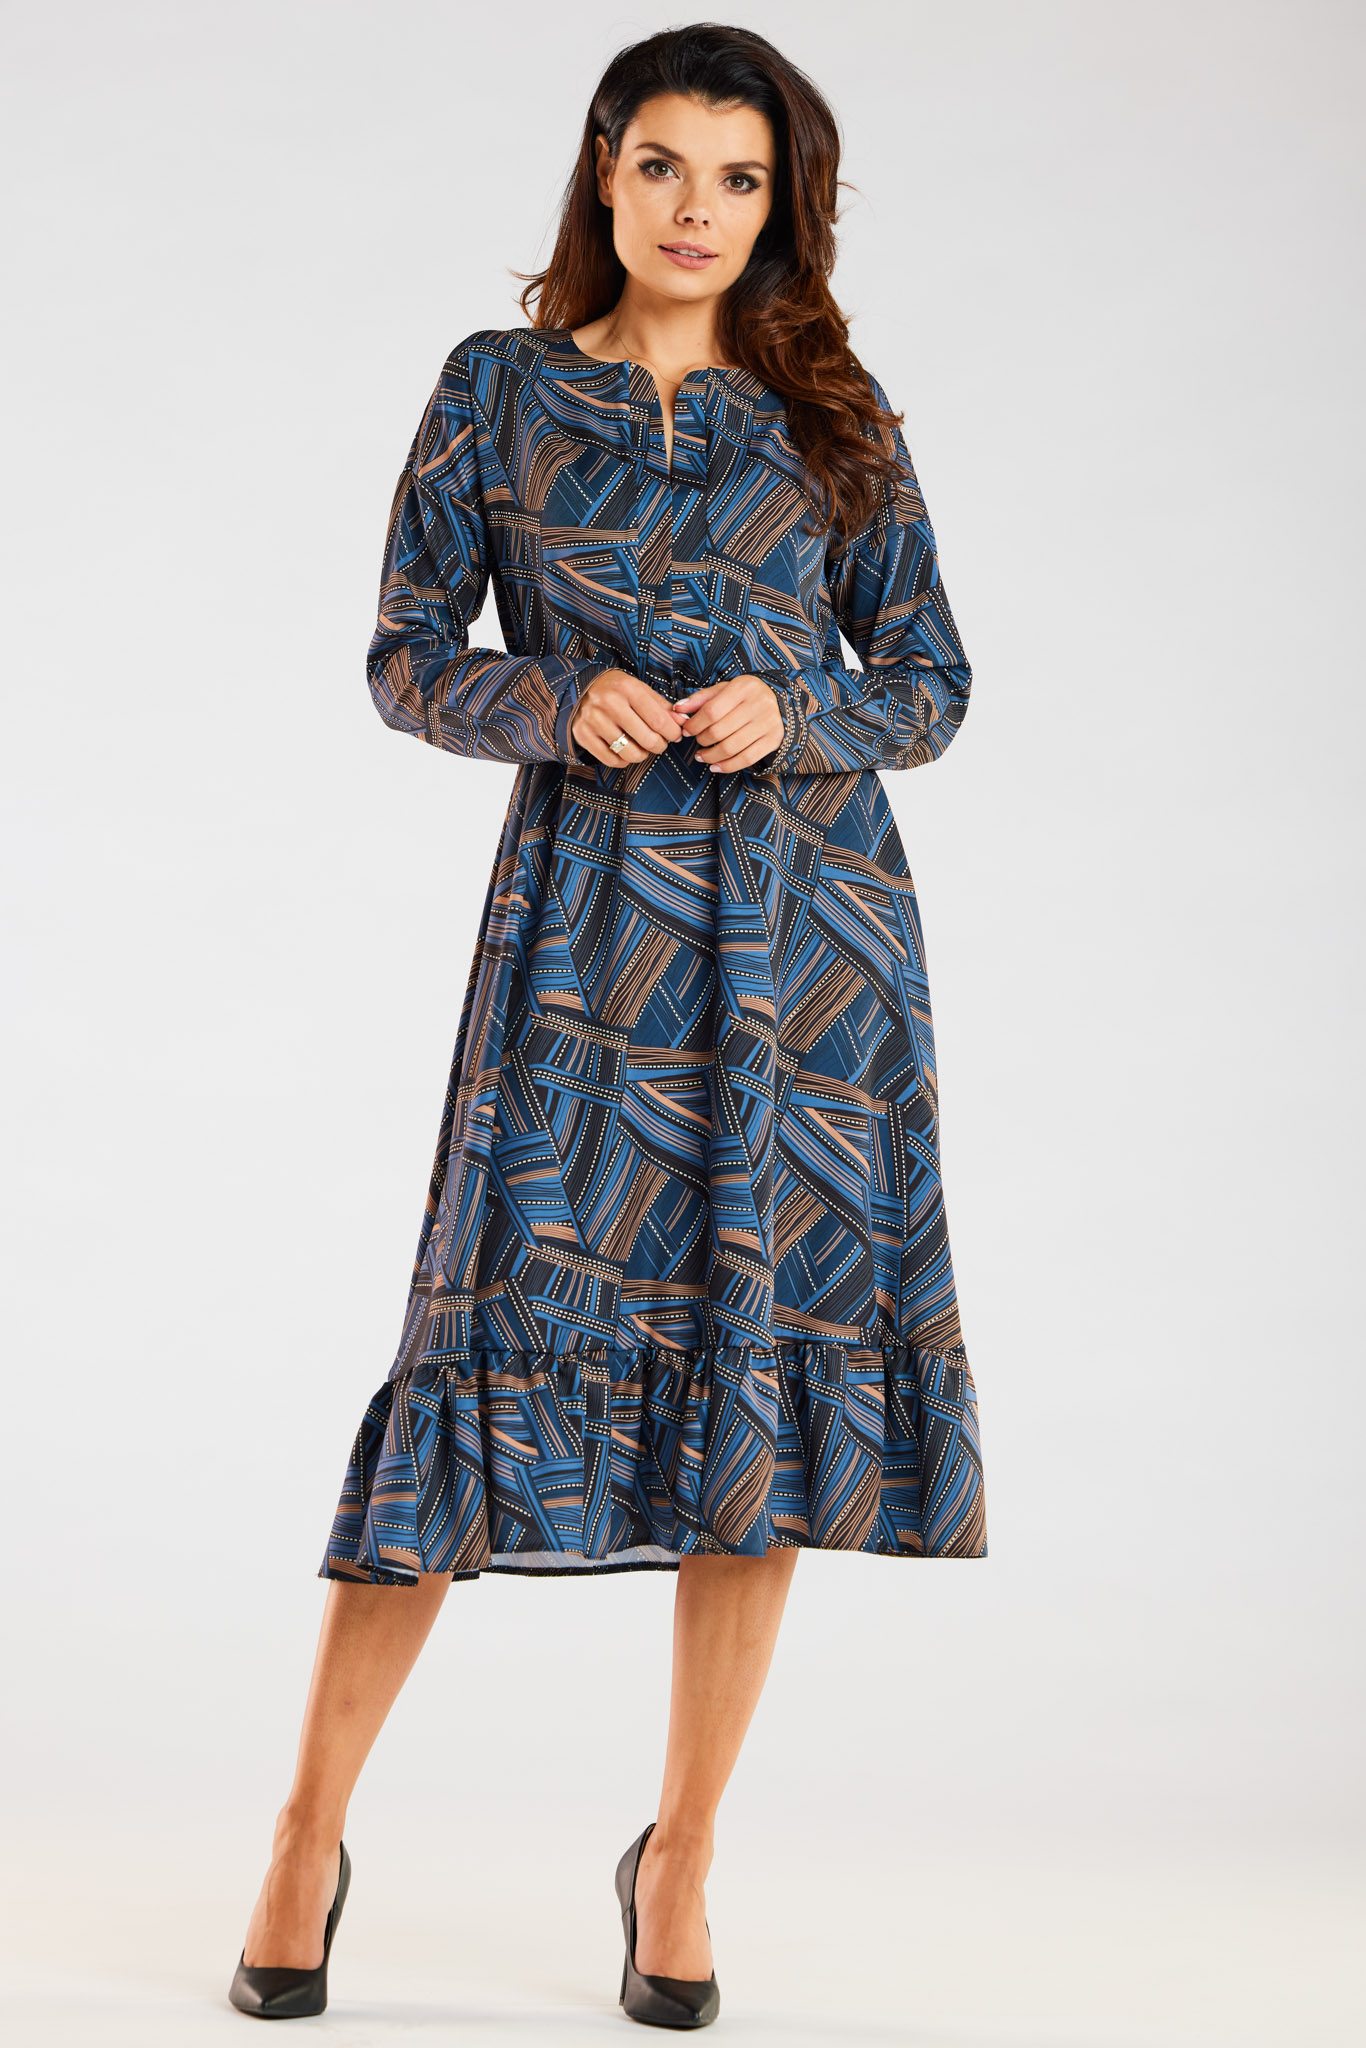 Awama Woman's Dress A468 Navy Blue/Brown